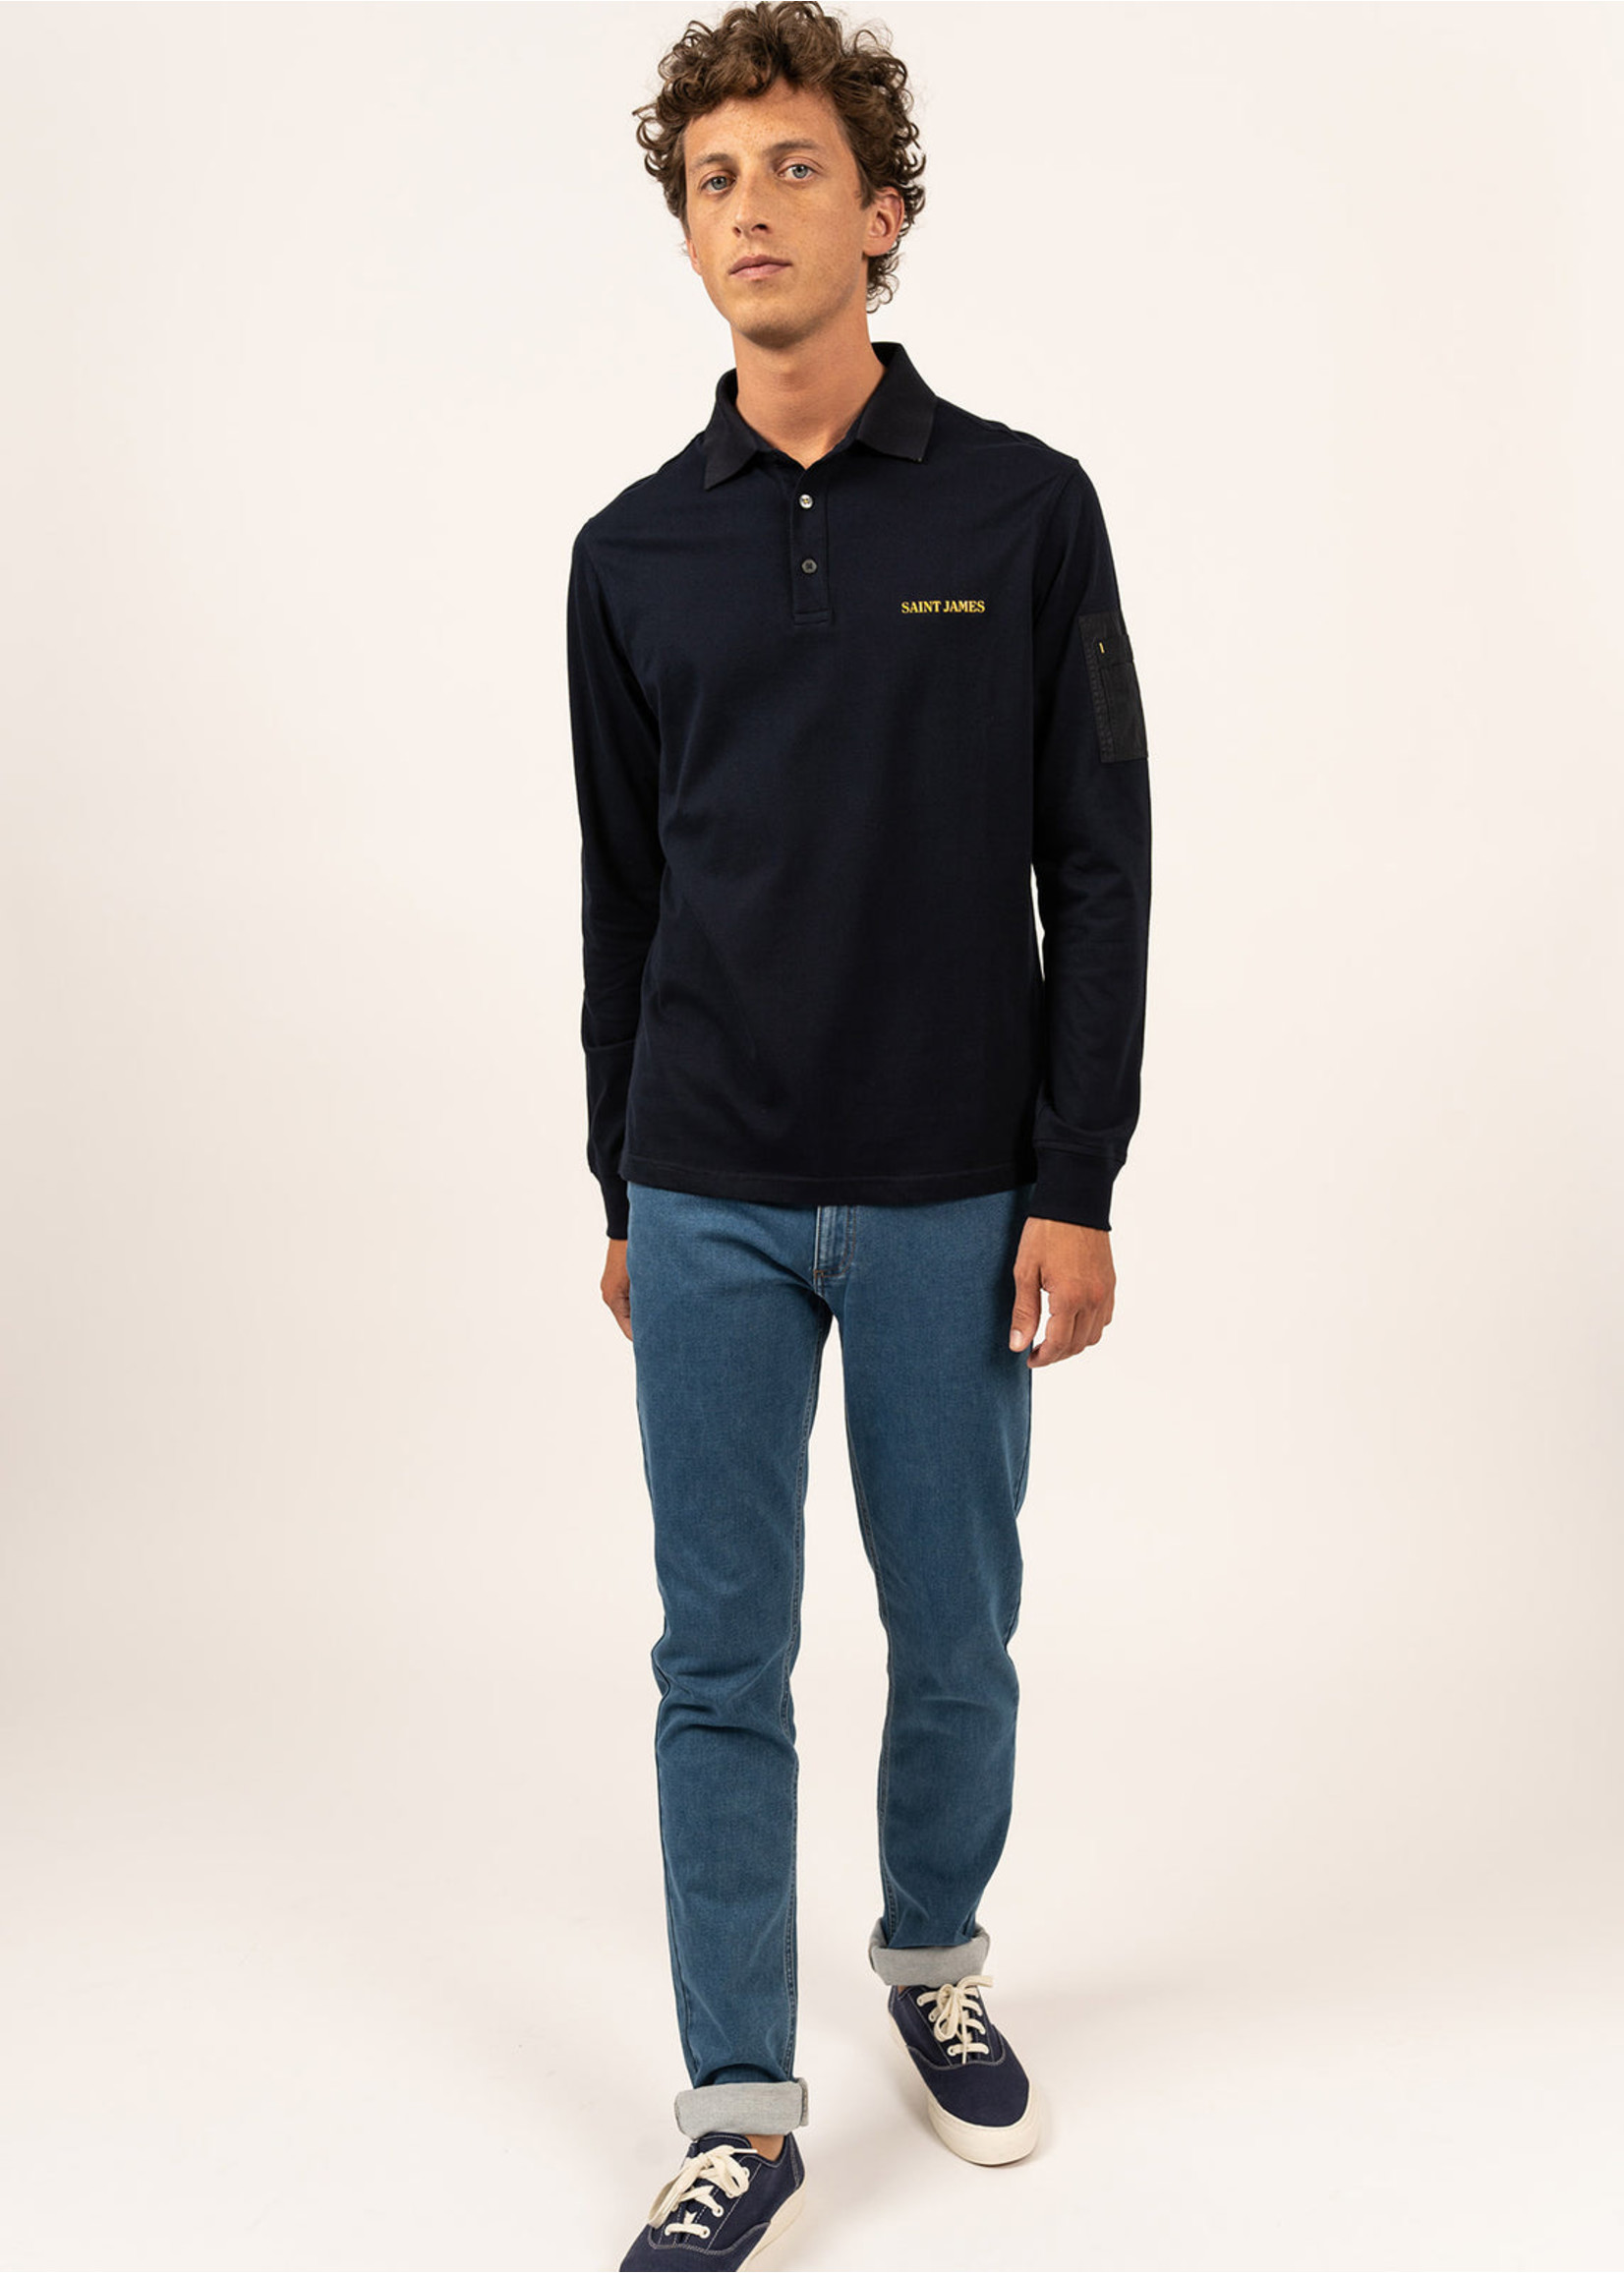 SAINT-JAMES Chris Long Sleeve Polo Shirt in cotton jersey